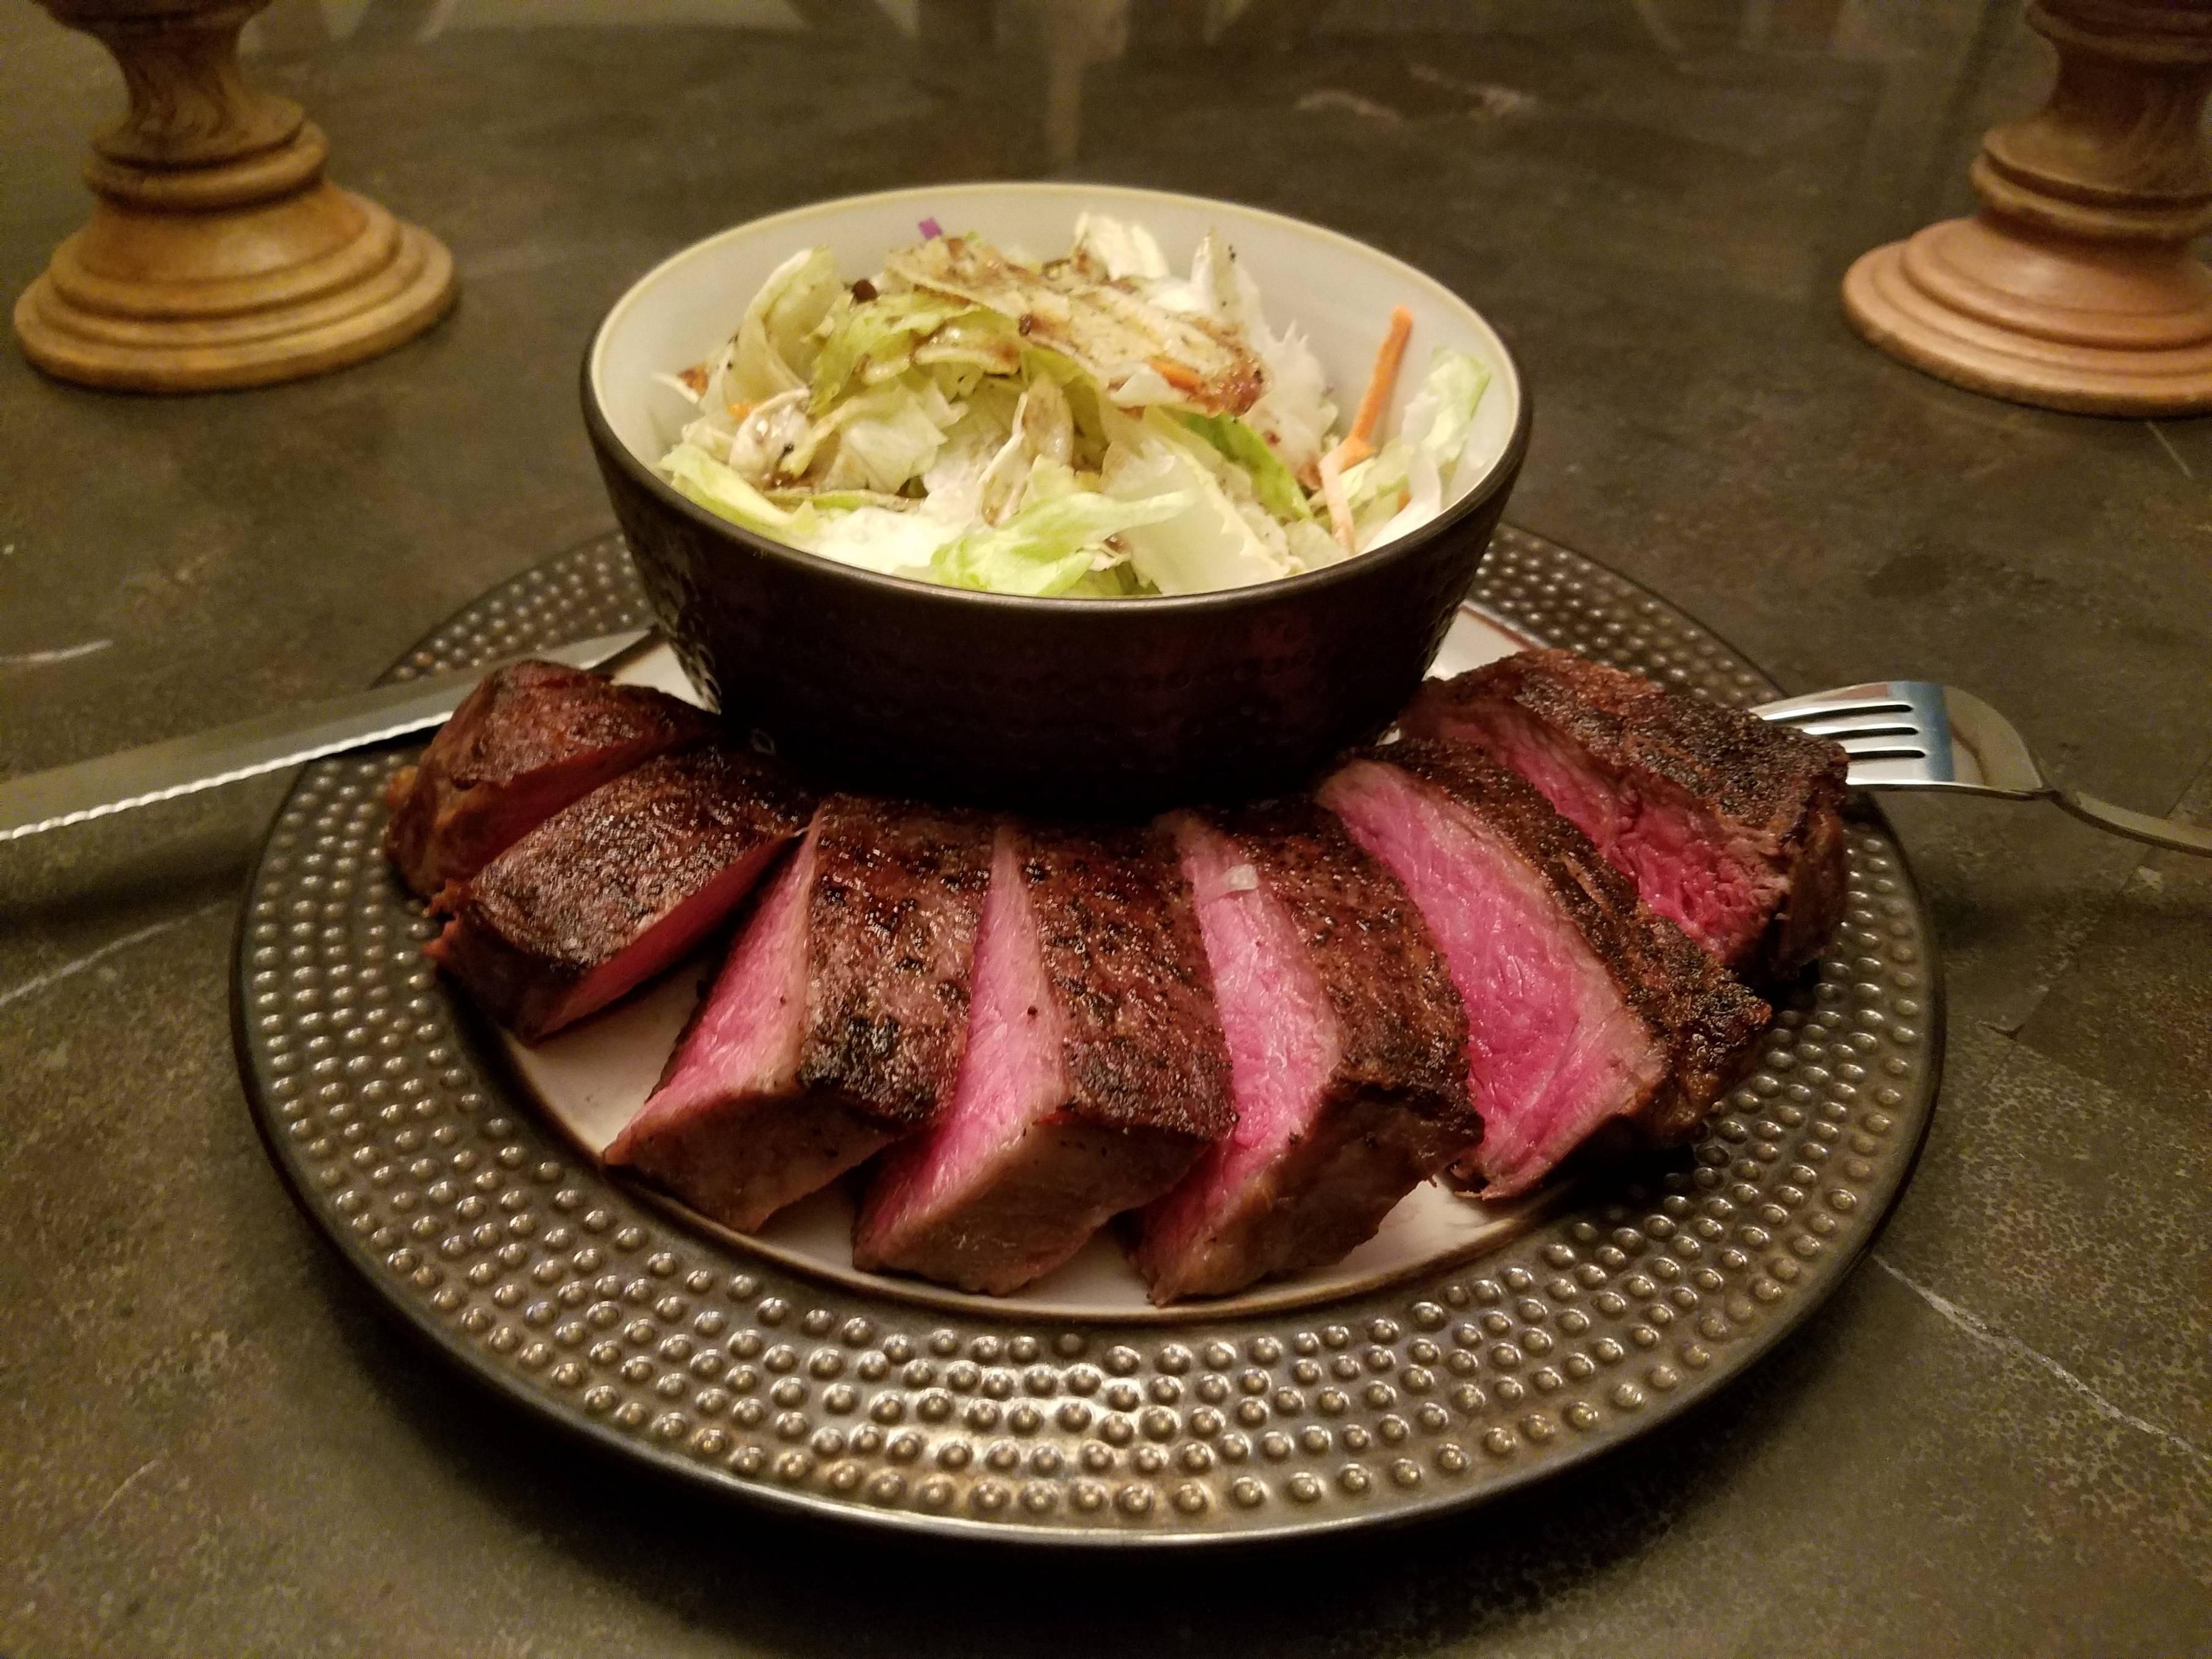 New York Strip steak and salad.